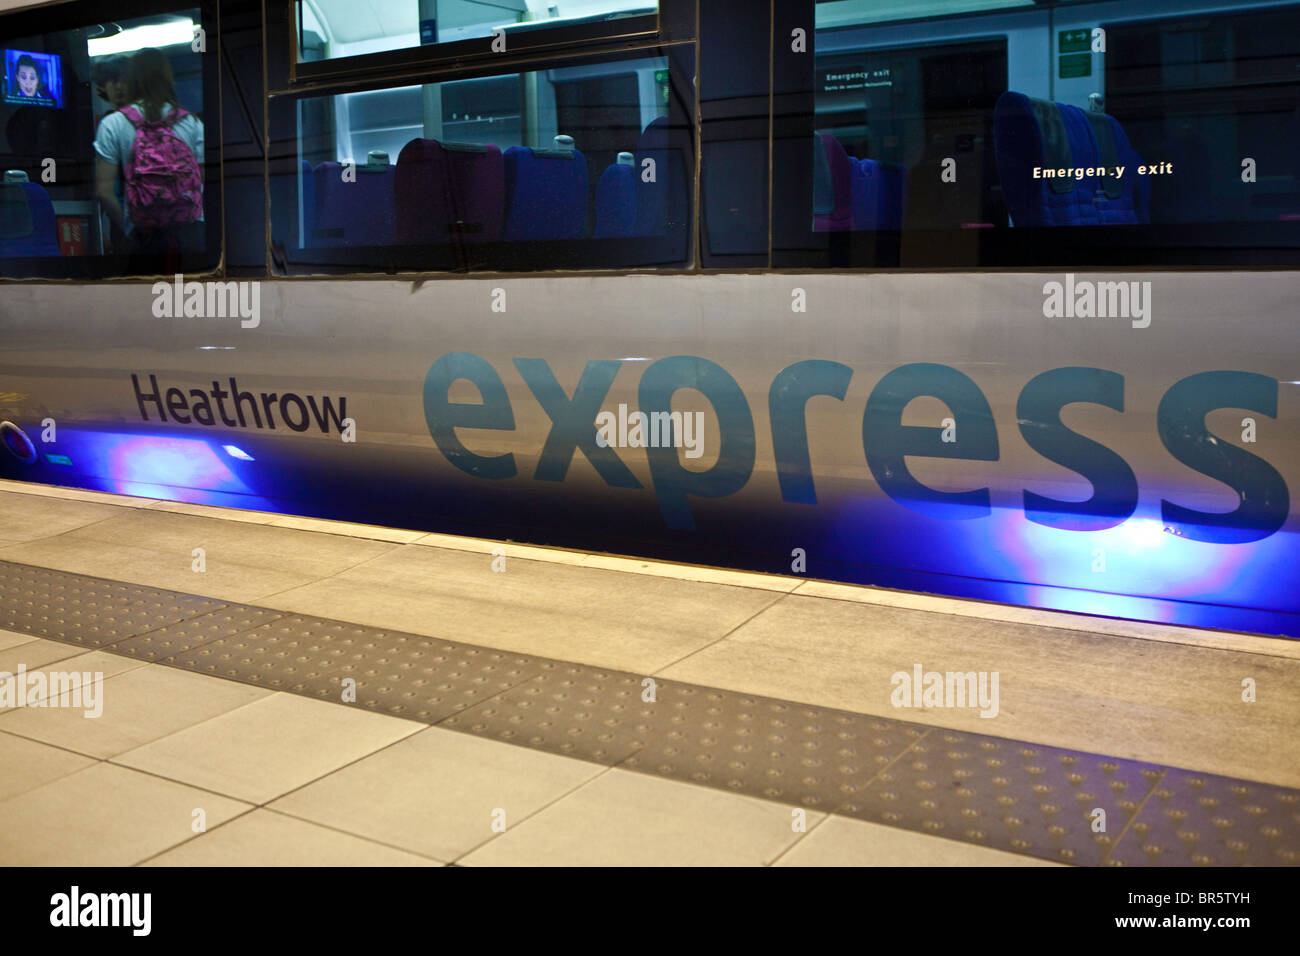 A Heathrow Express train at London Heathrow Airport’s Terminal 5 station. Stock Photo